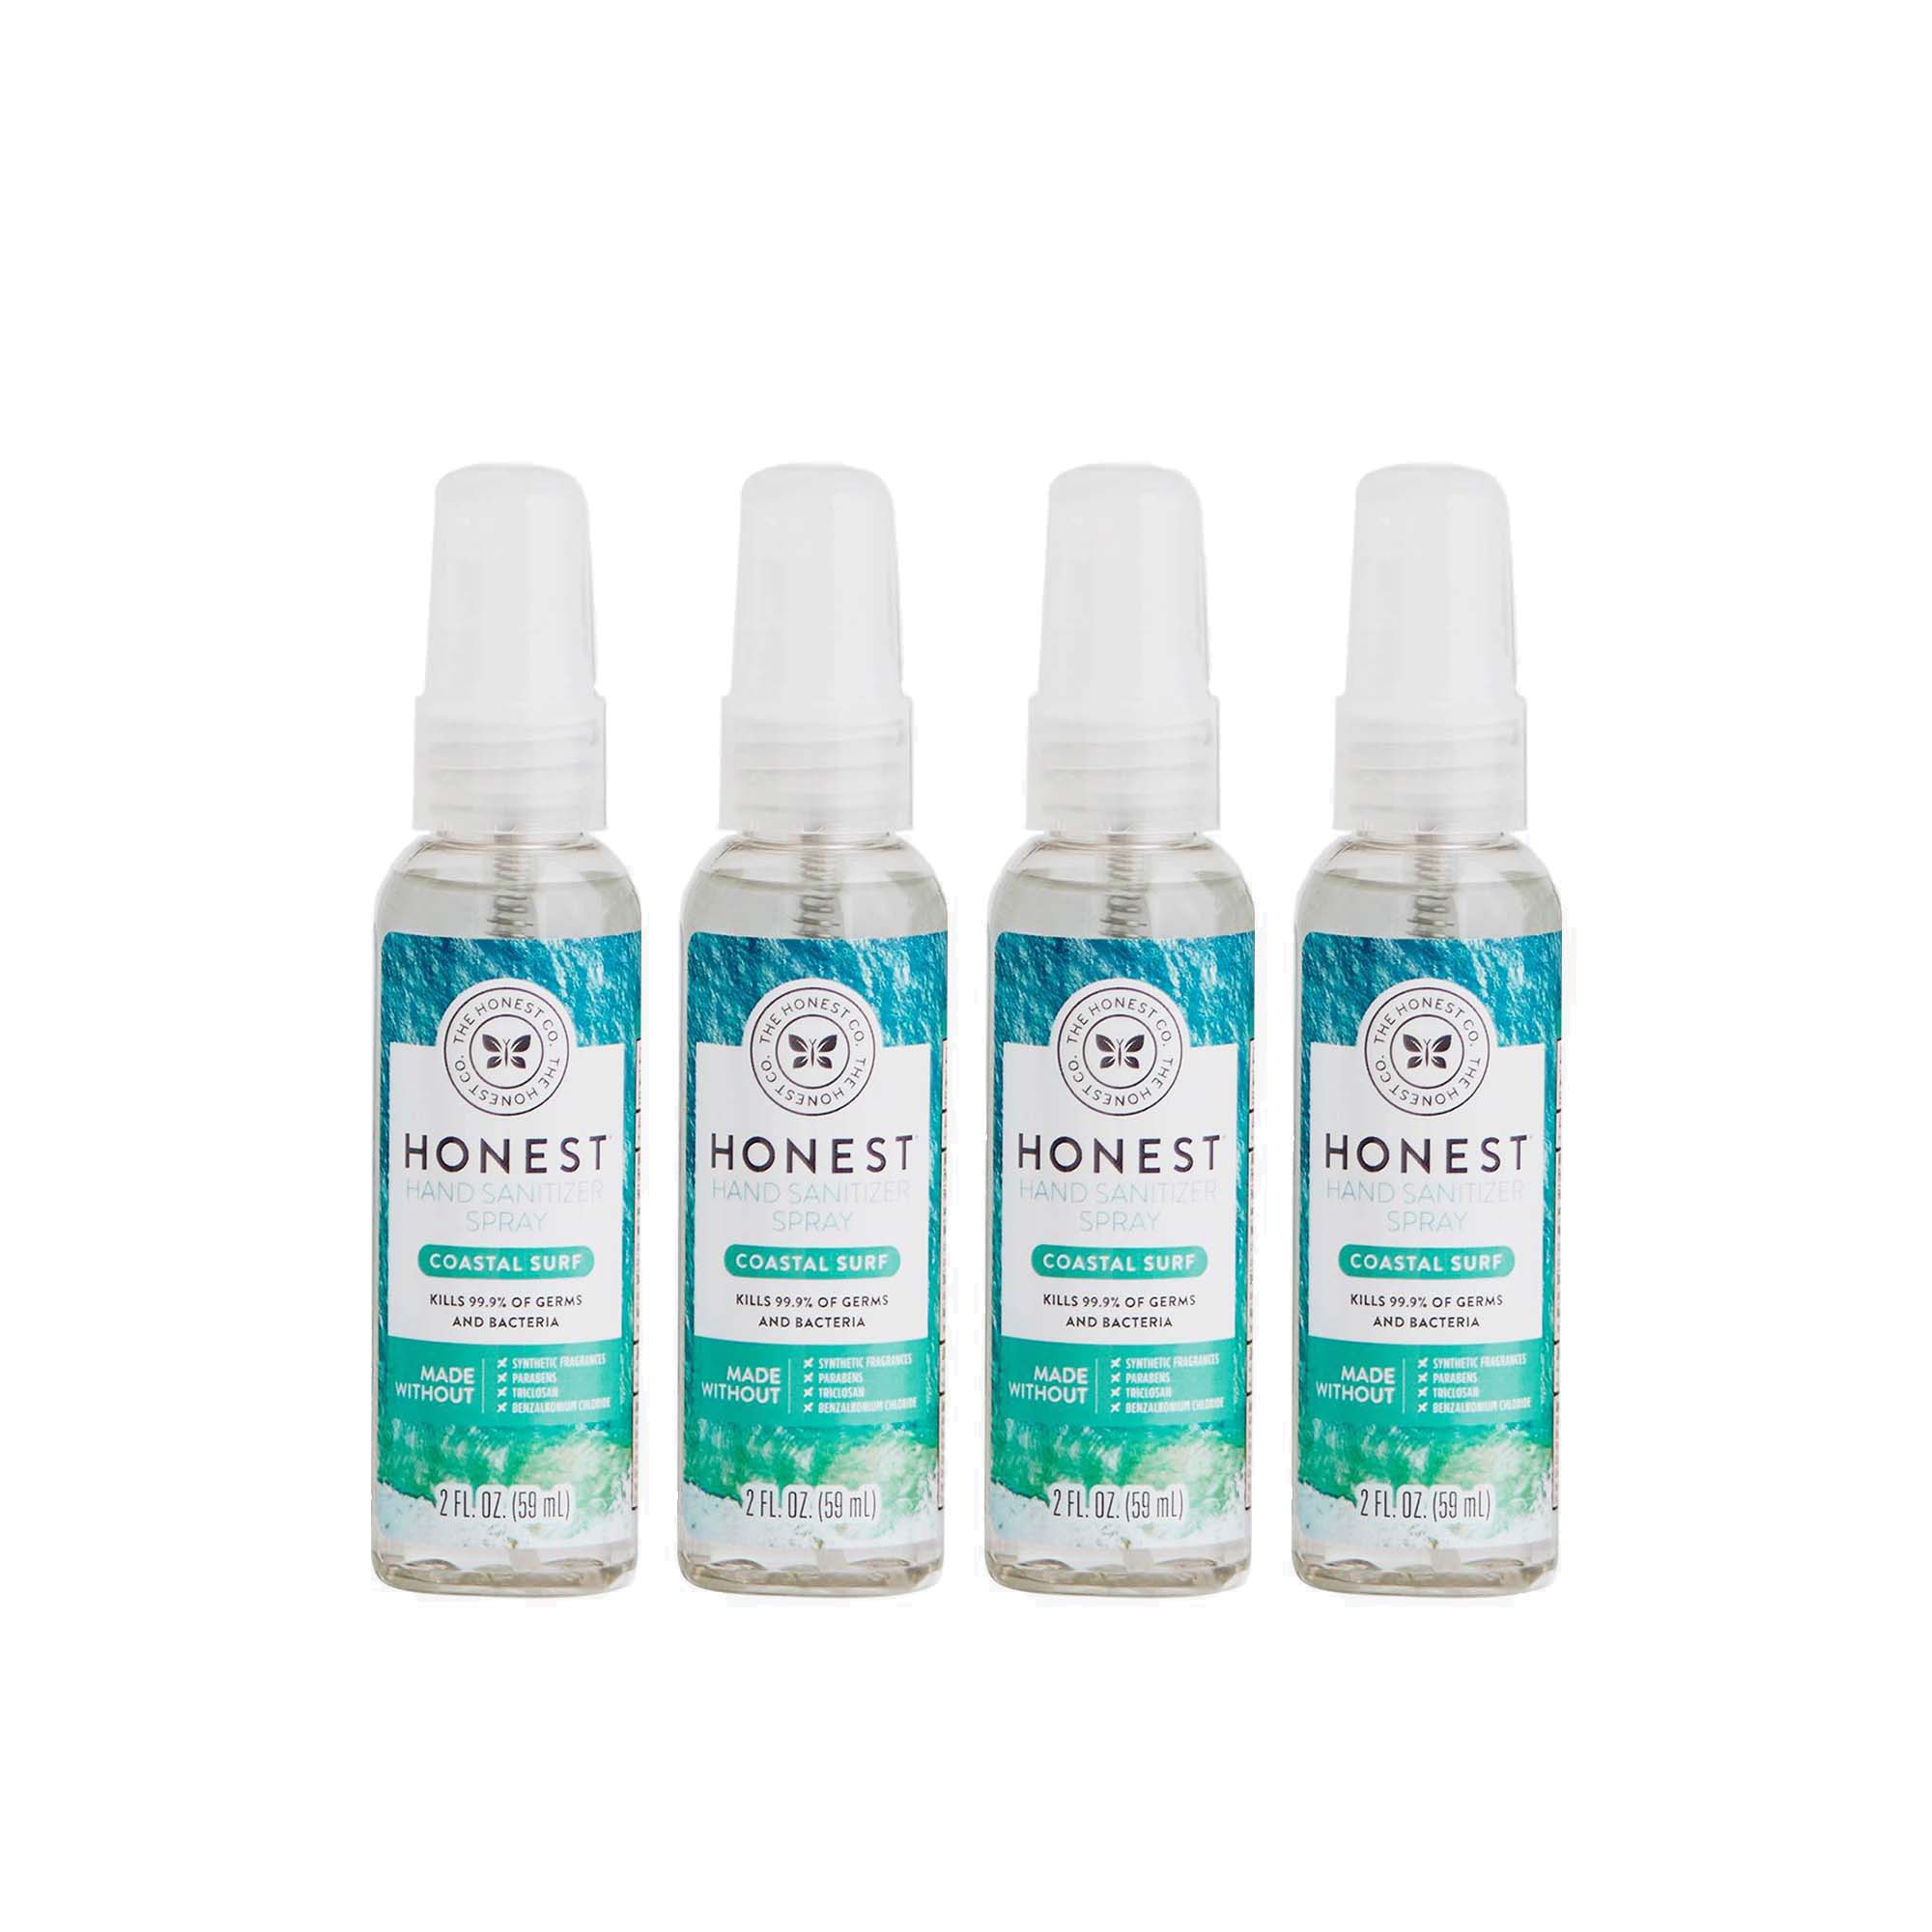 Honest Hand Sanitizer Spray, Coastal Surf, 4-Pack, Hypoallergenic, Plant-Based